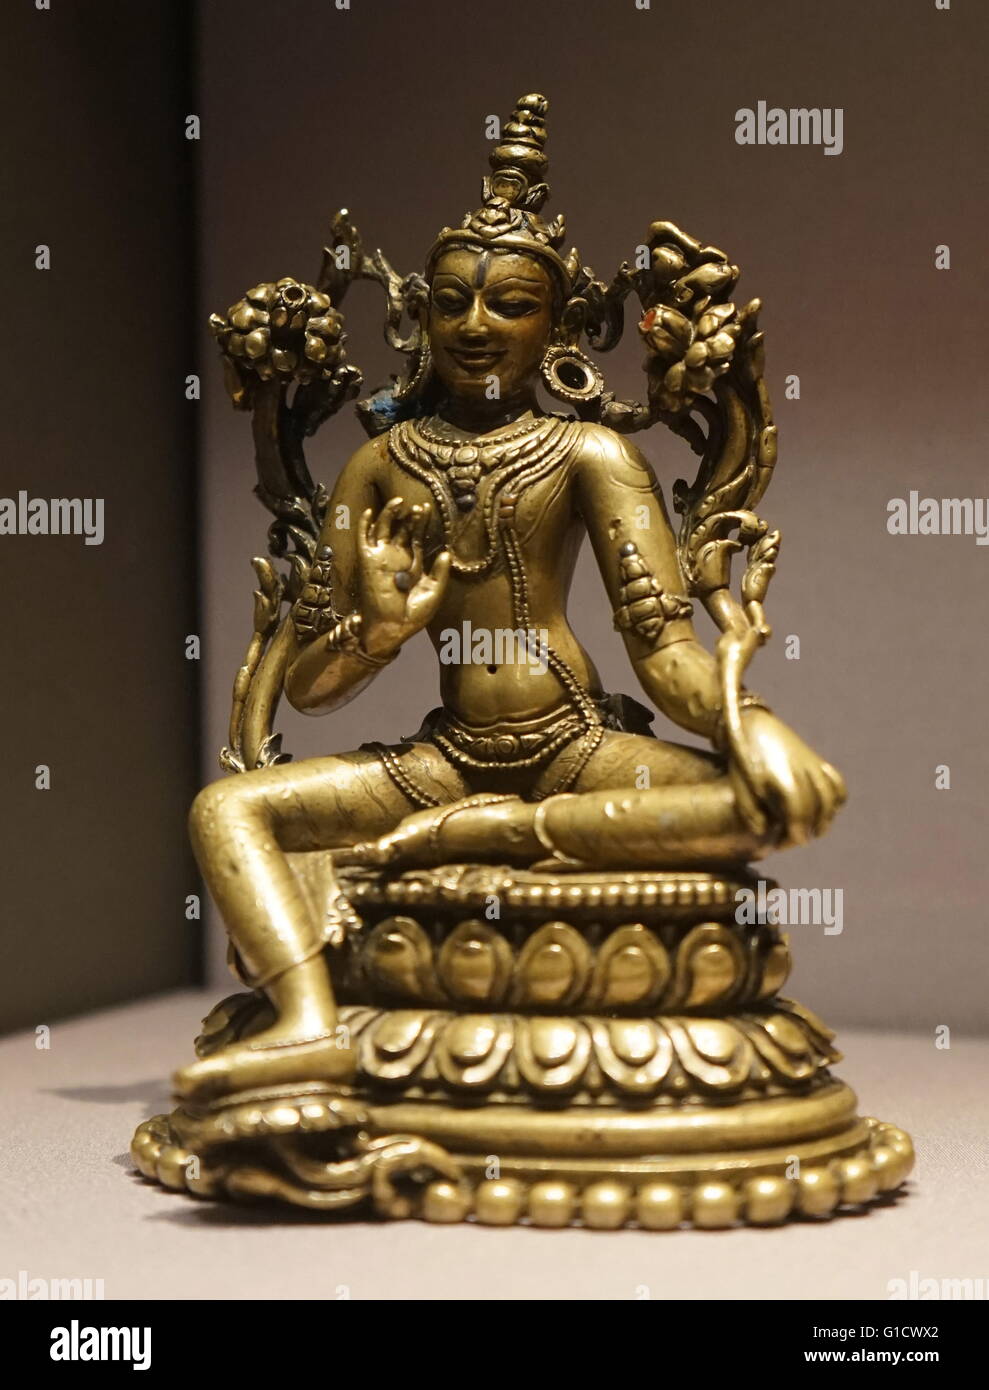 Il bronzo figure sedute di Avalokiteshvara, la manifestazione terrena dell'auto-data di nascita eterna Buddha Amitabha. Datato xii secolo Foto Stock